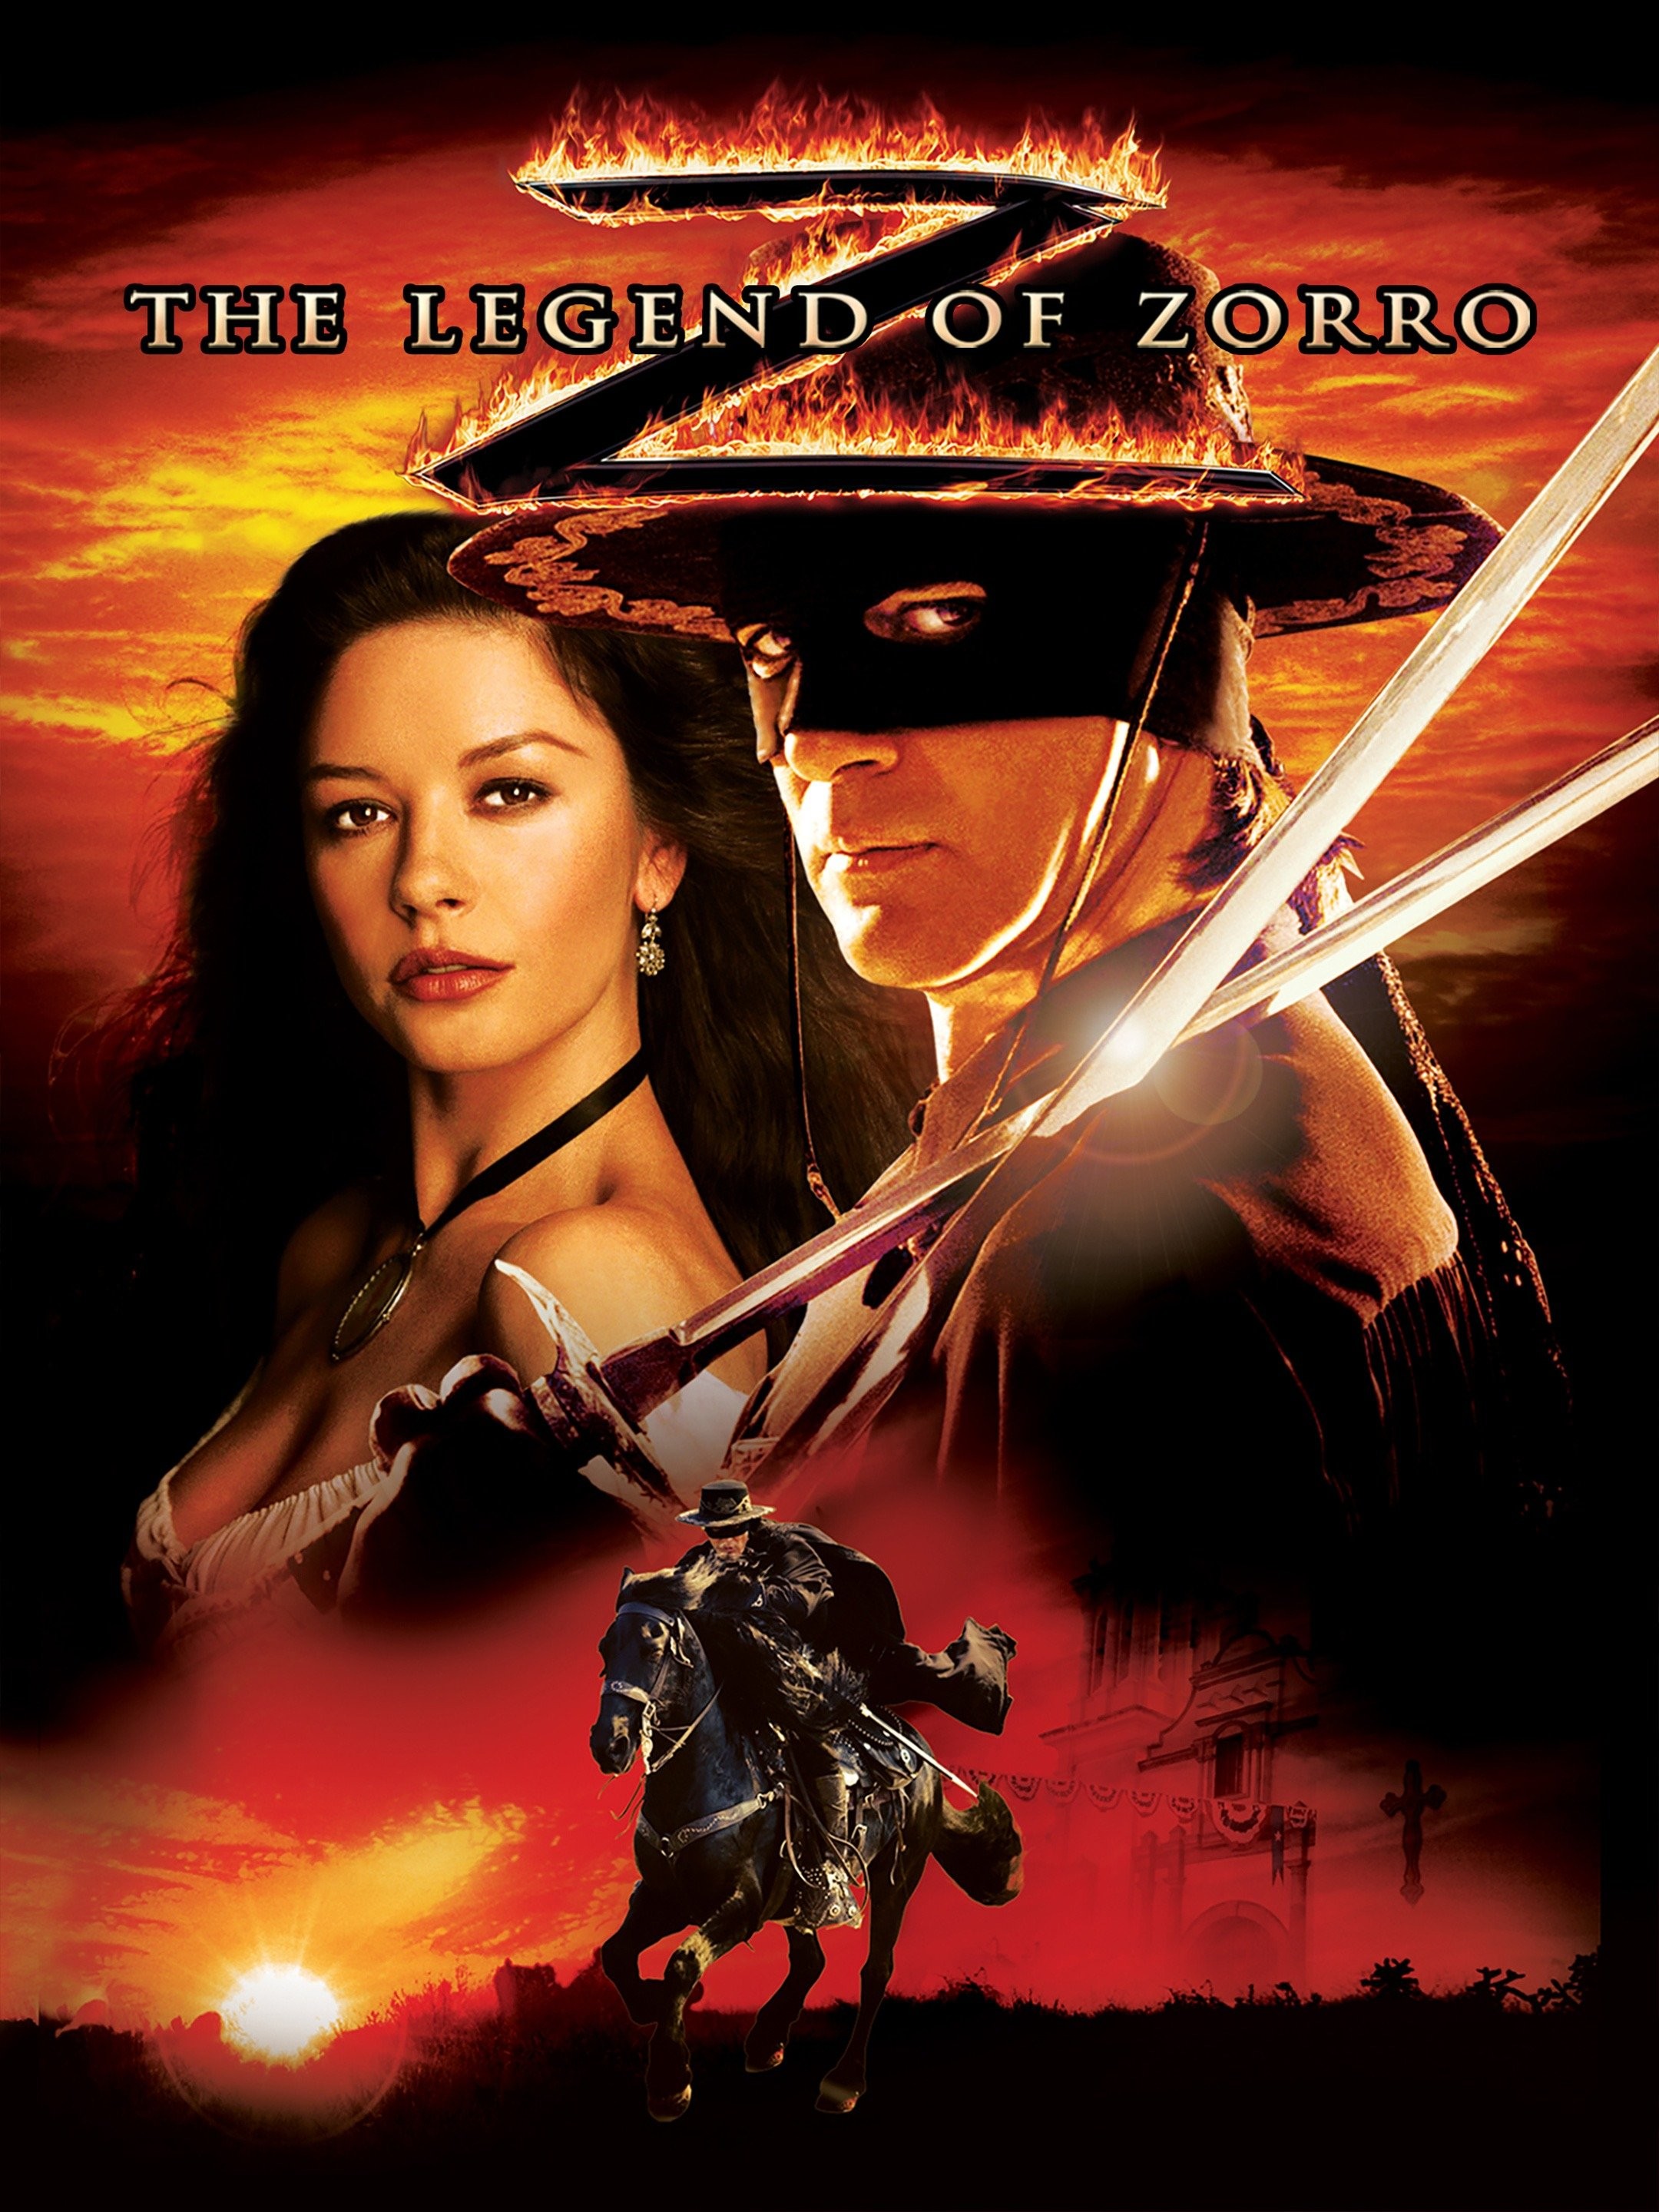 Fan Casting Catherine Zeta-Jones as Lara Croft in Tomb Raider